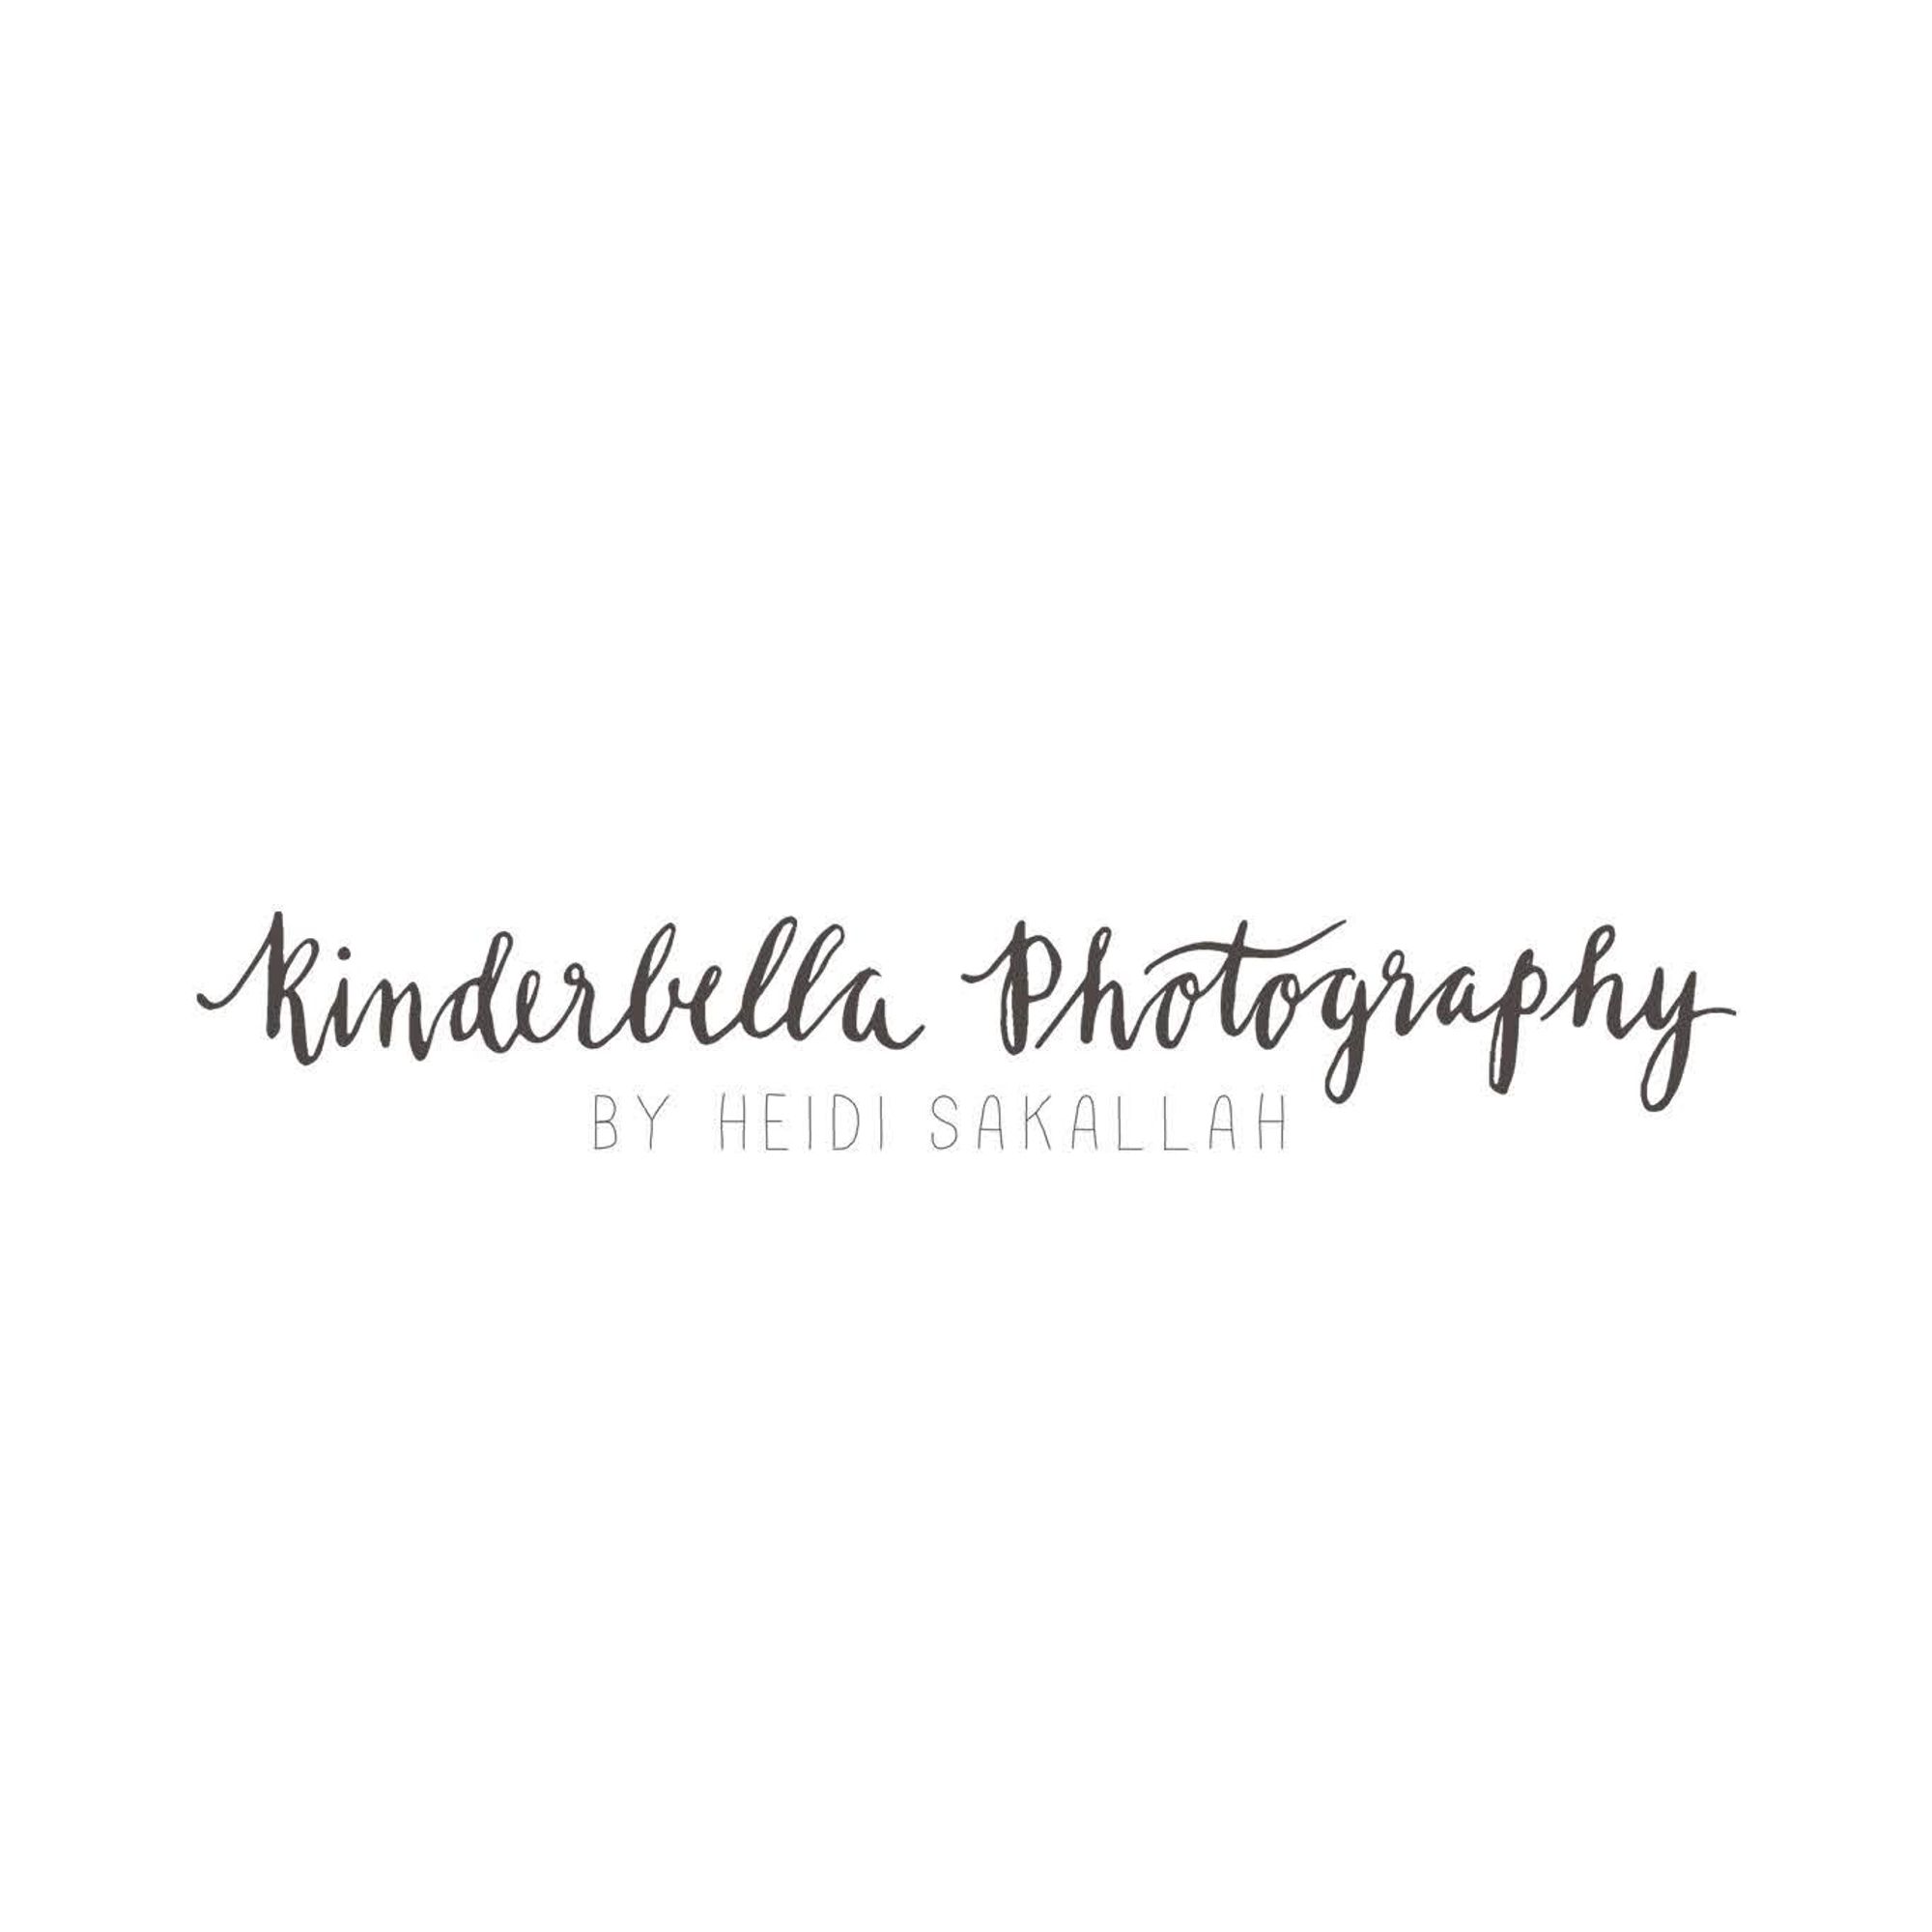 Kinderbella Photography